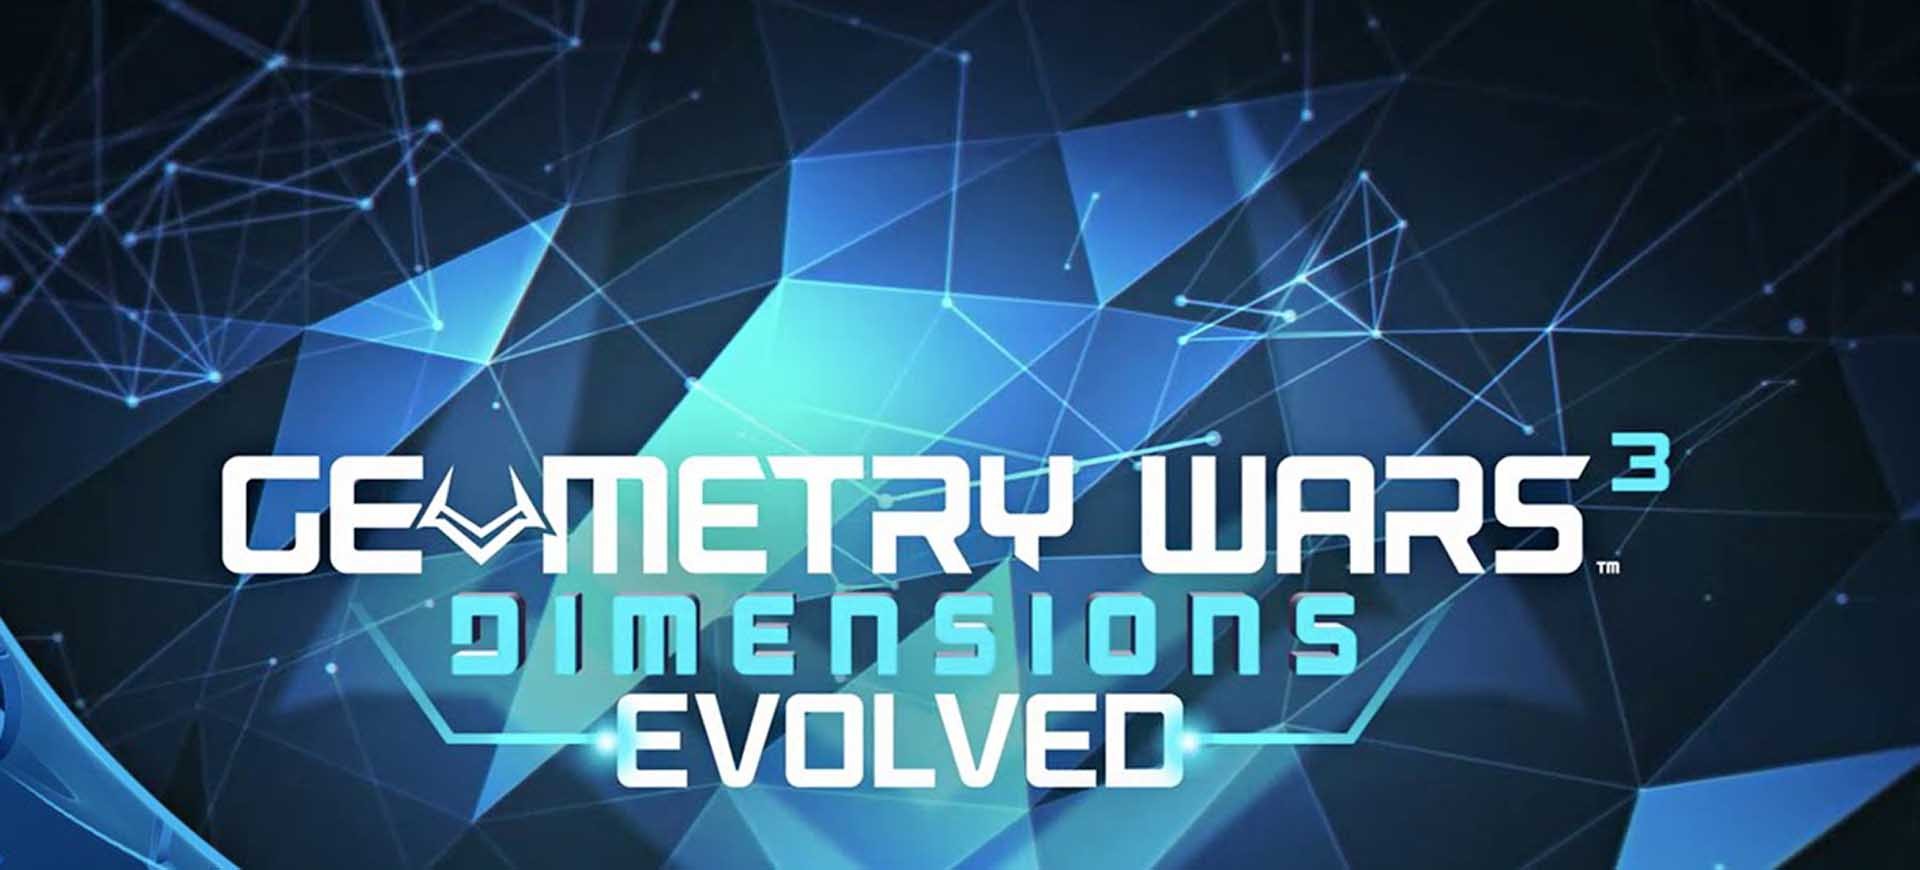 Geometry Wars 3 Dimension Evolved (4)